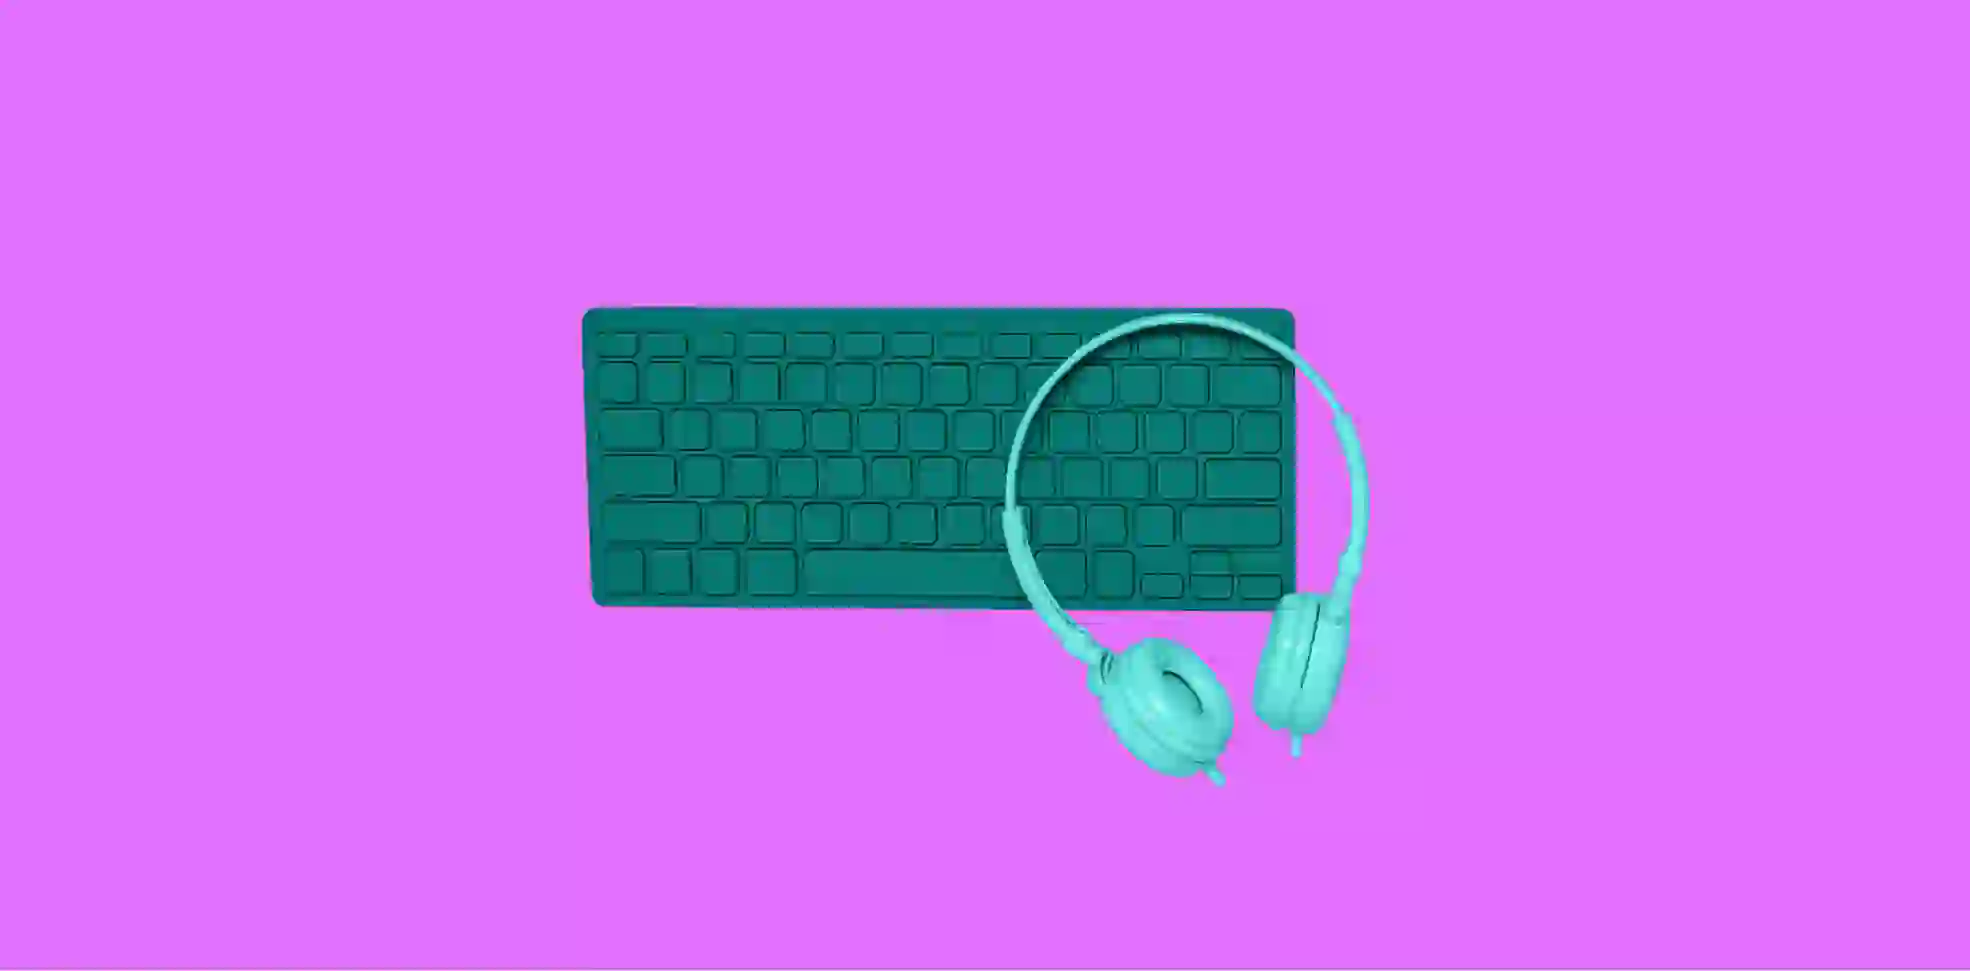 a keyboard and headphones